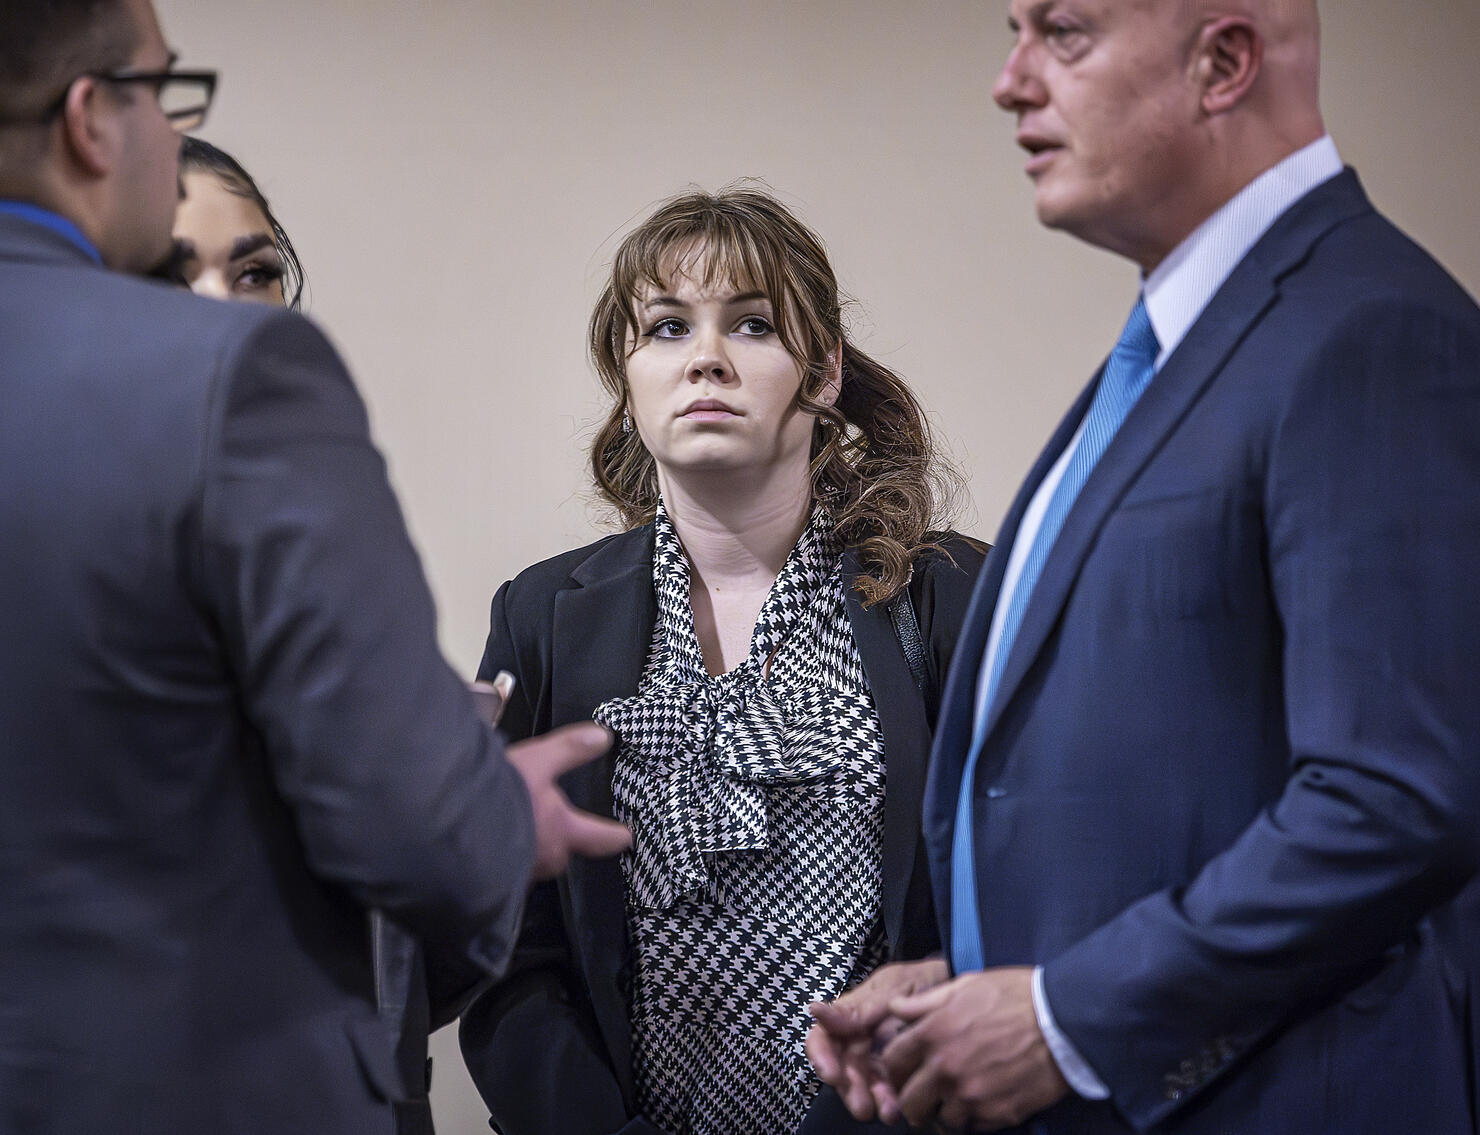 "Rust" Armorer Hannah Gutierrez-Reed Appears In Court